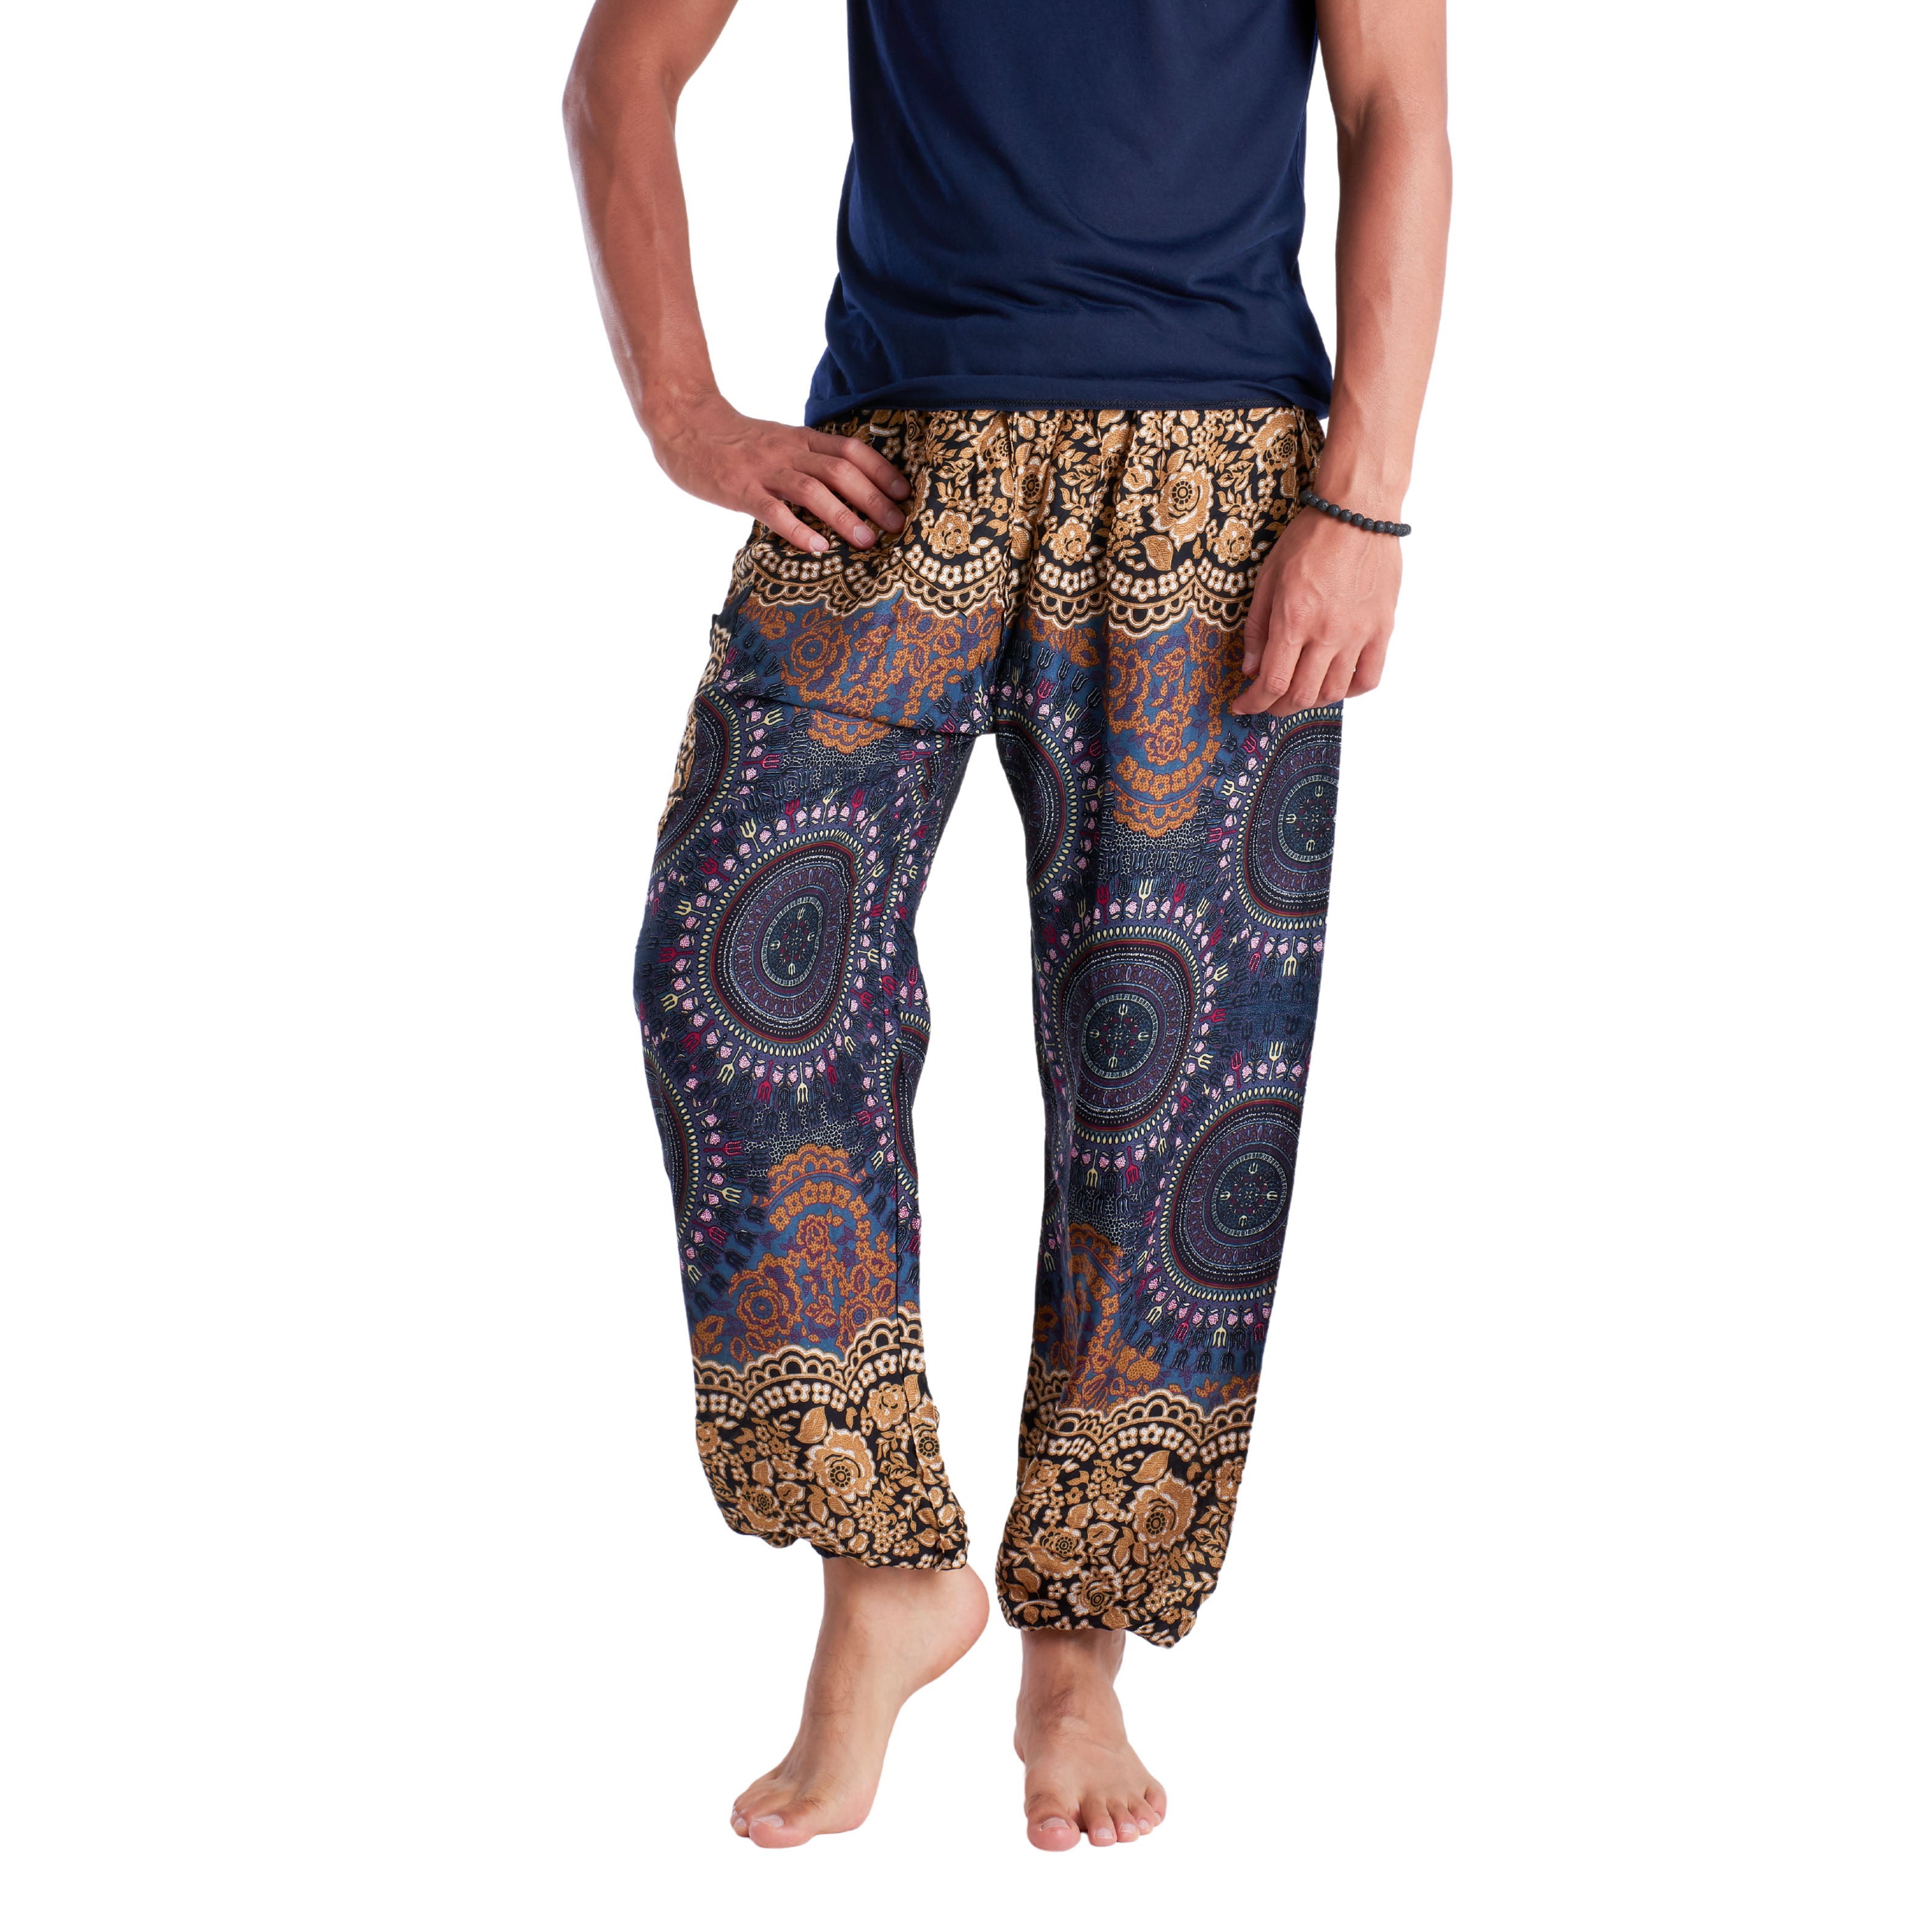 MISTIQ PANTS - Drawstring Elepanta Drawstring Pants - Buy Today Elephant Pants Jewelry And Bohemian Clothes Handmade In Thailand Help To Save The Elephants FairTrade And Vegan